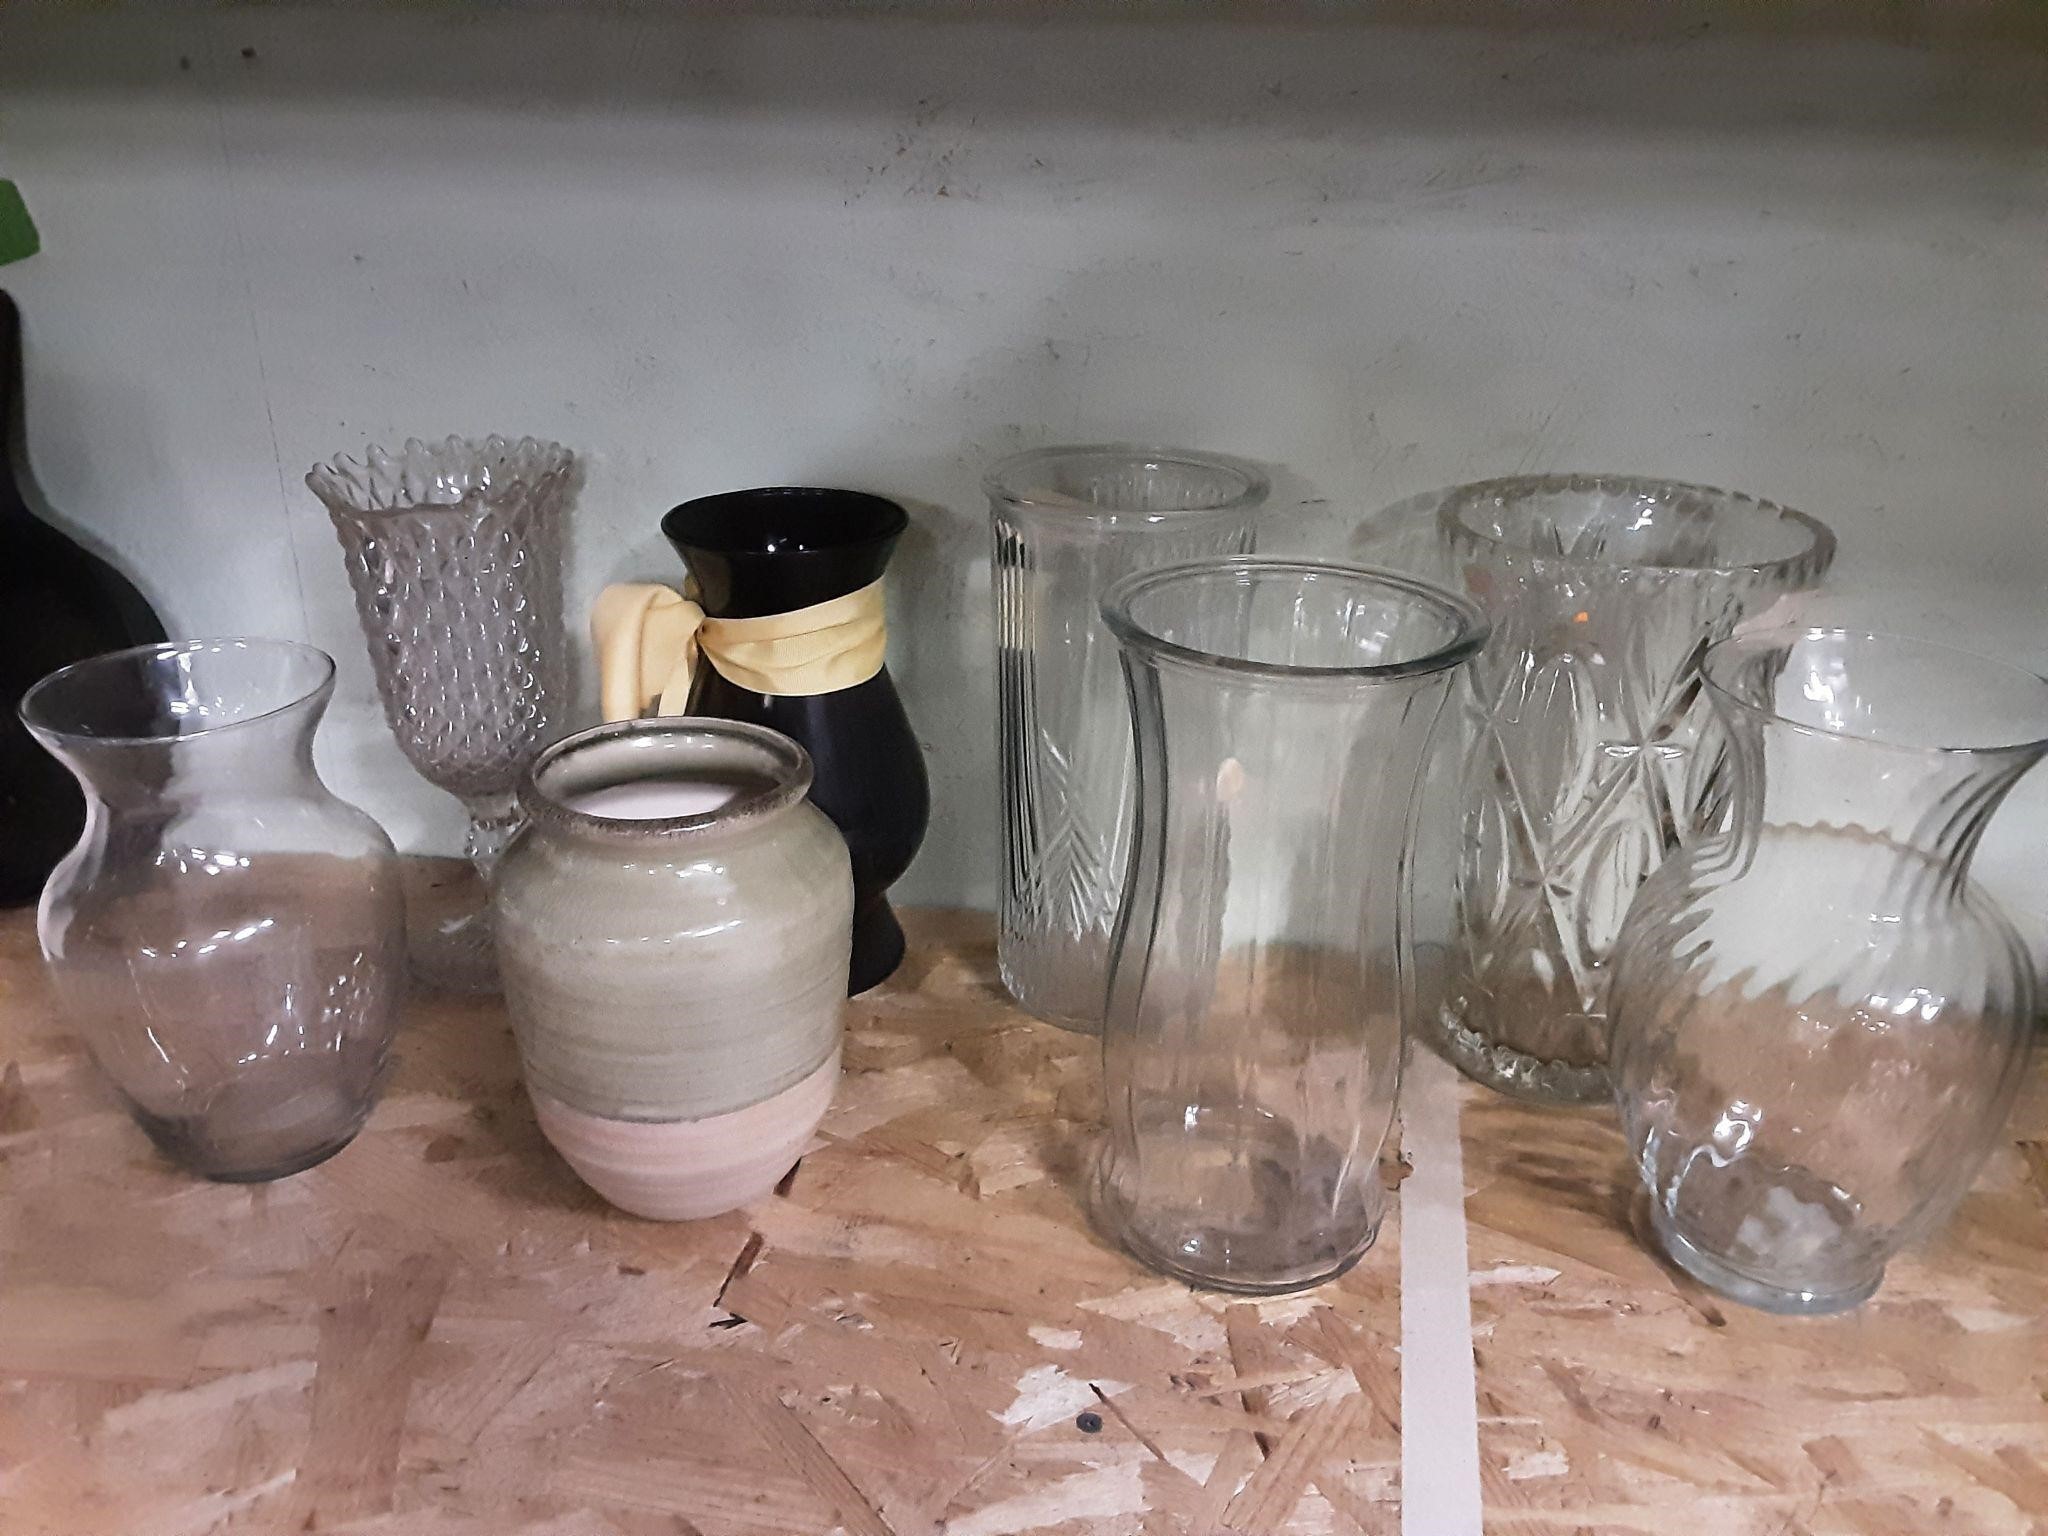 Lot of 8 Vases